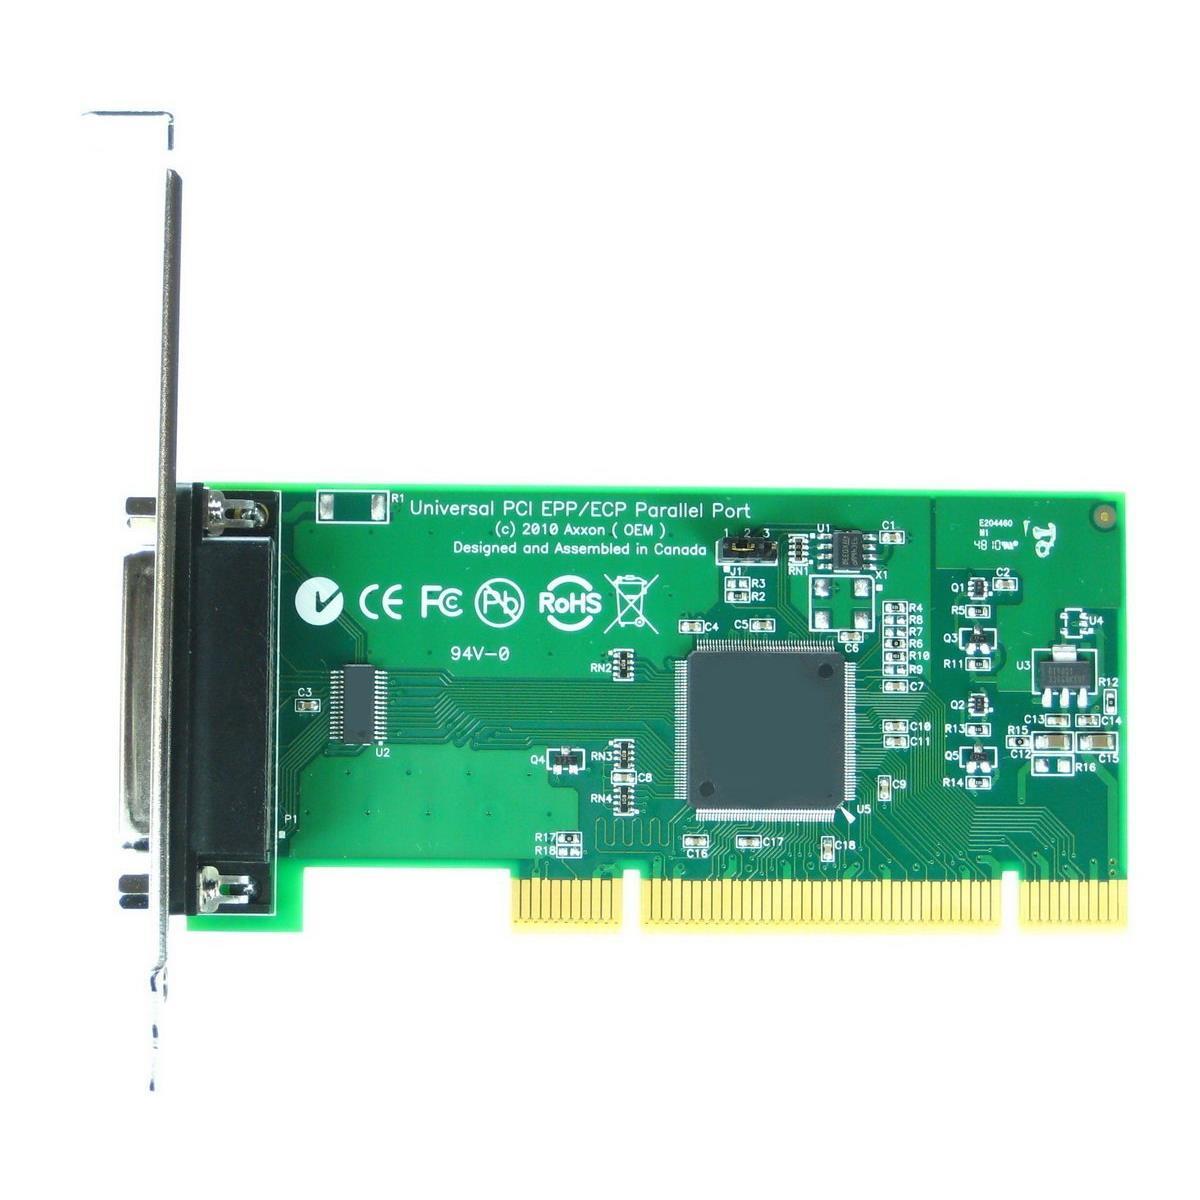 Image of Axxon Rev B Universal PCI Bus EPP/ECP Parallel Port Host Adapter